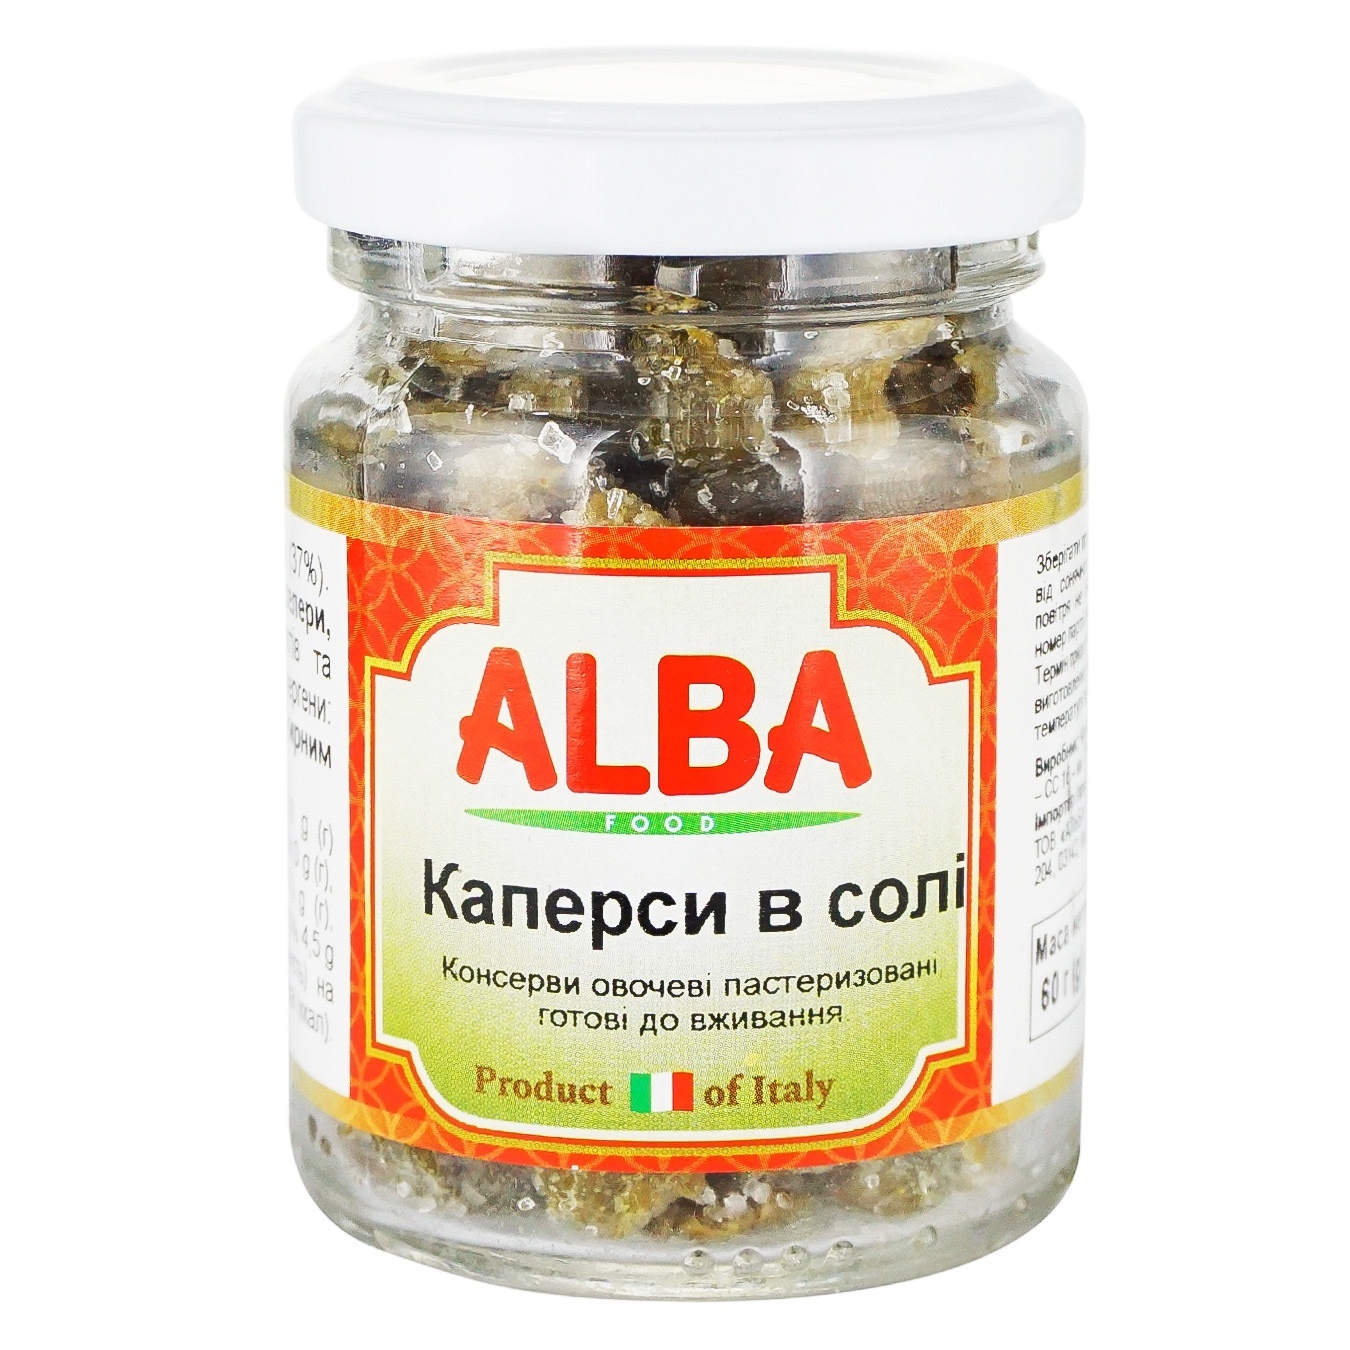 Alba Food capers in salt 106ml